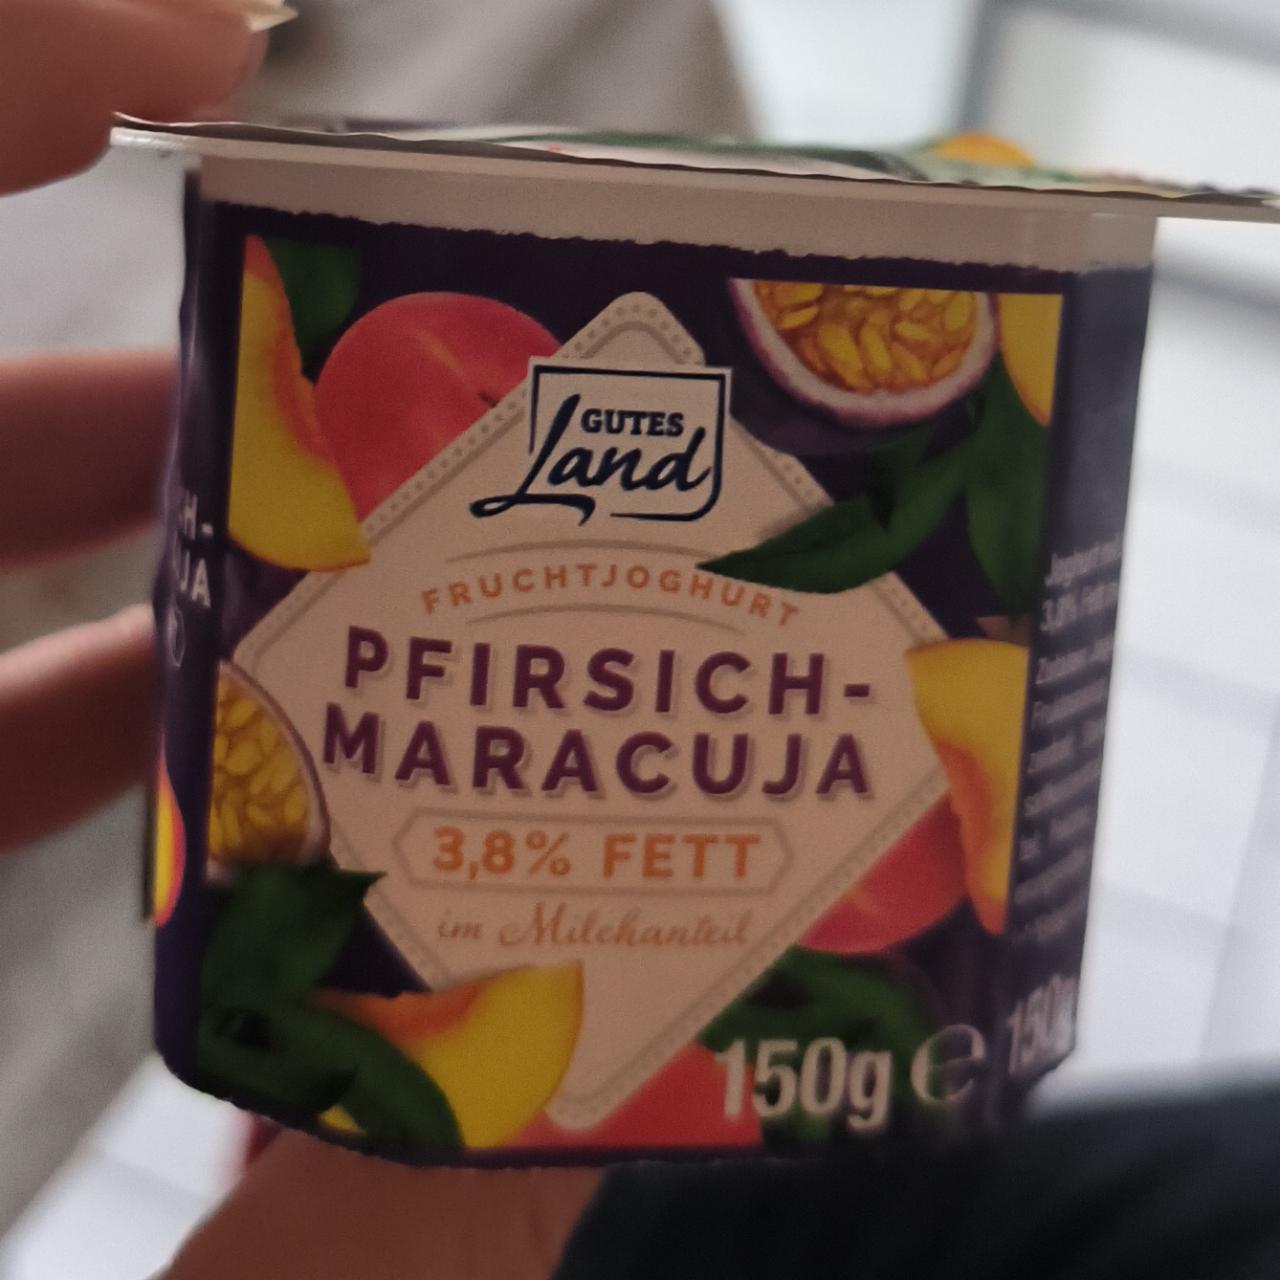 Фото - Йогурт протеиновый персик маракуйя High Protein joghurterzeugnis Pfirsich-Maracuja Gutes Land